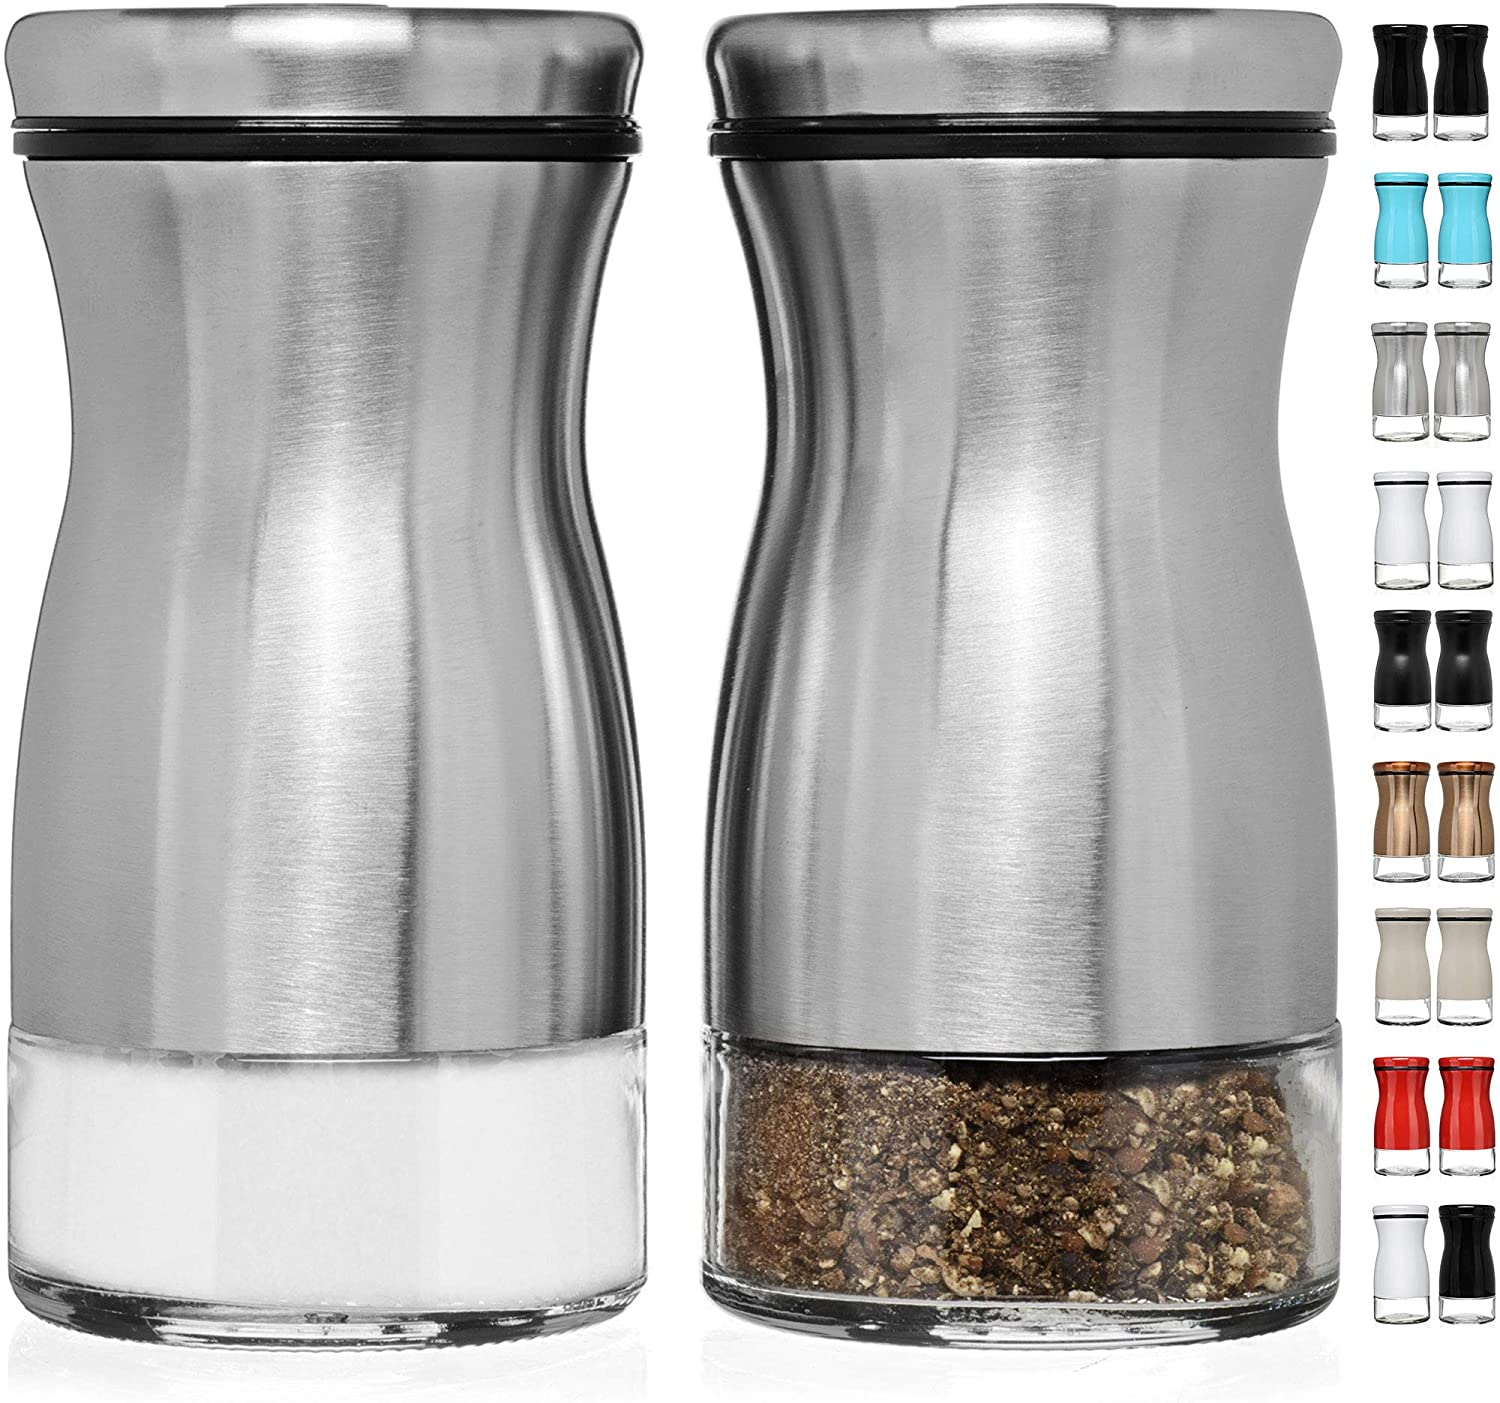 CHEFVANTAGE No-Fingerprint Metal Salt And Pepper Shakers